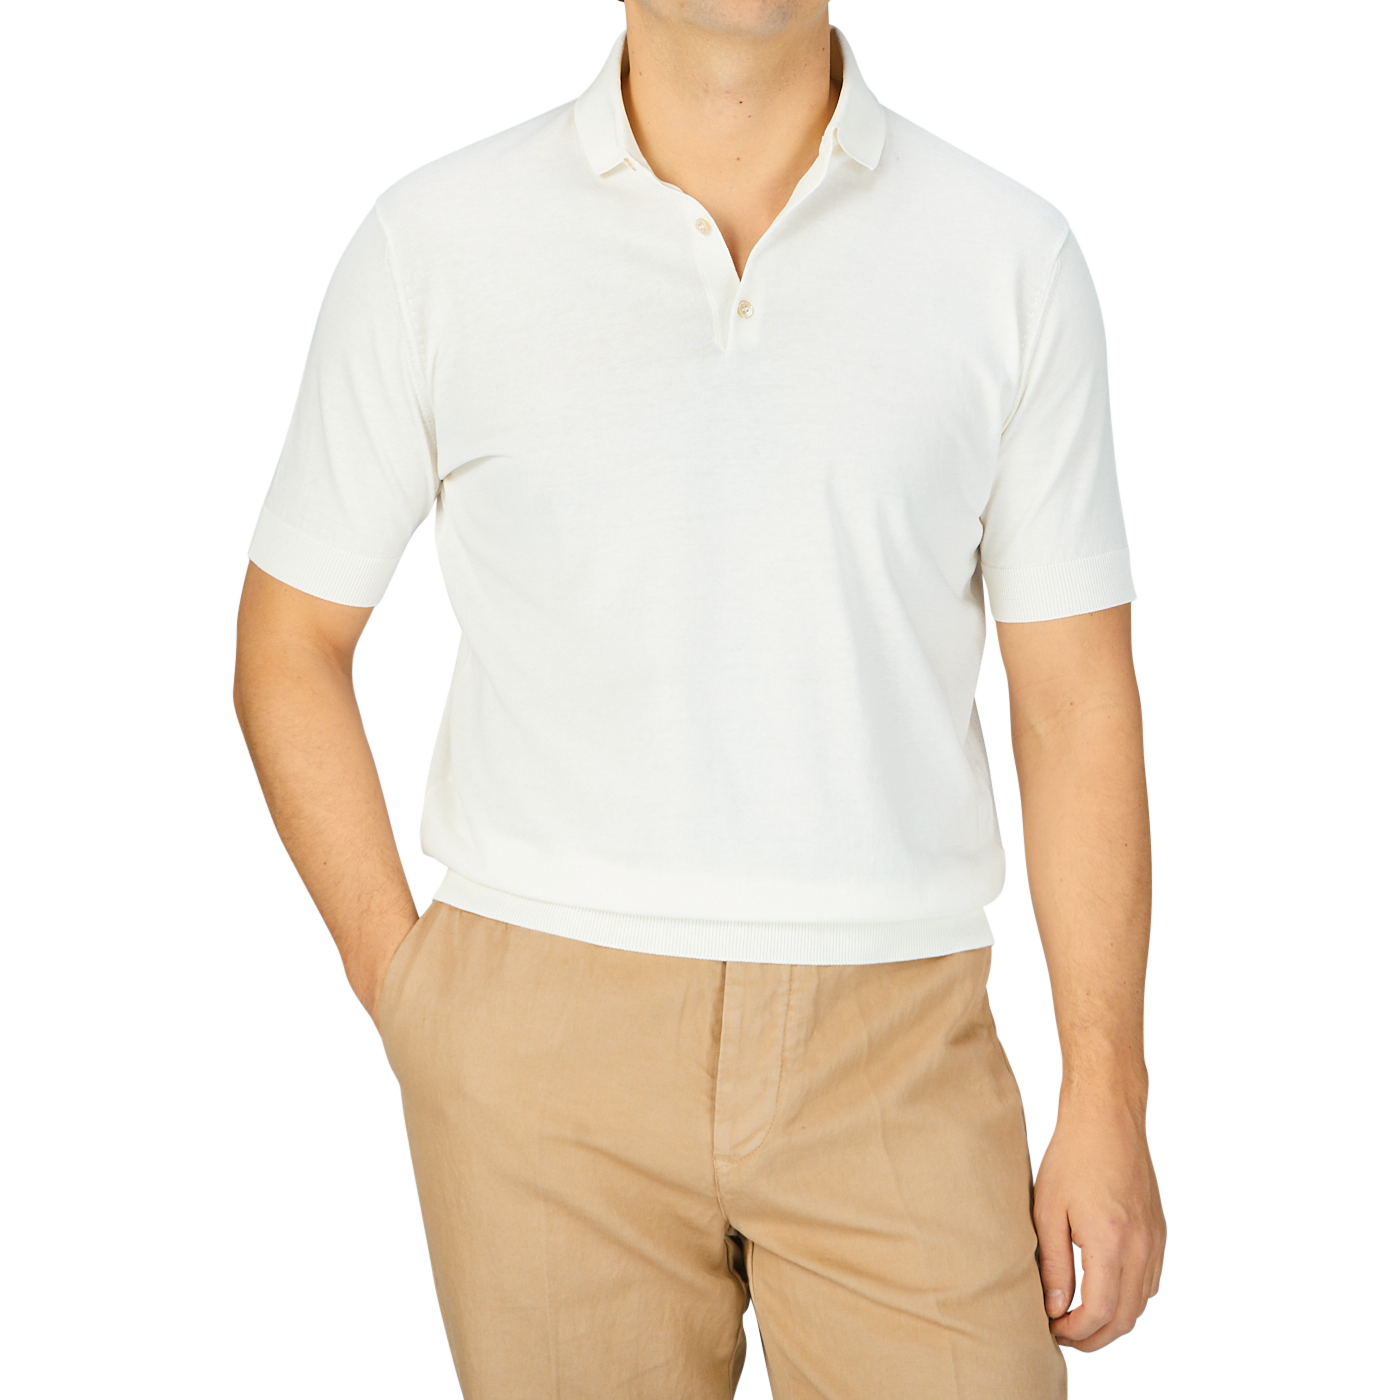 A man wearing a Latte White Crepe Cotton Polo Shirt by Filippo de Laurentiis and tan pants.